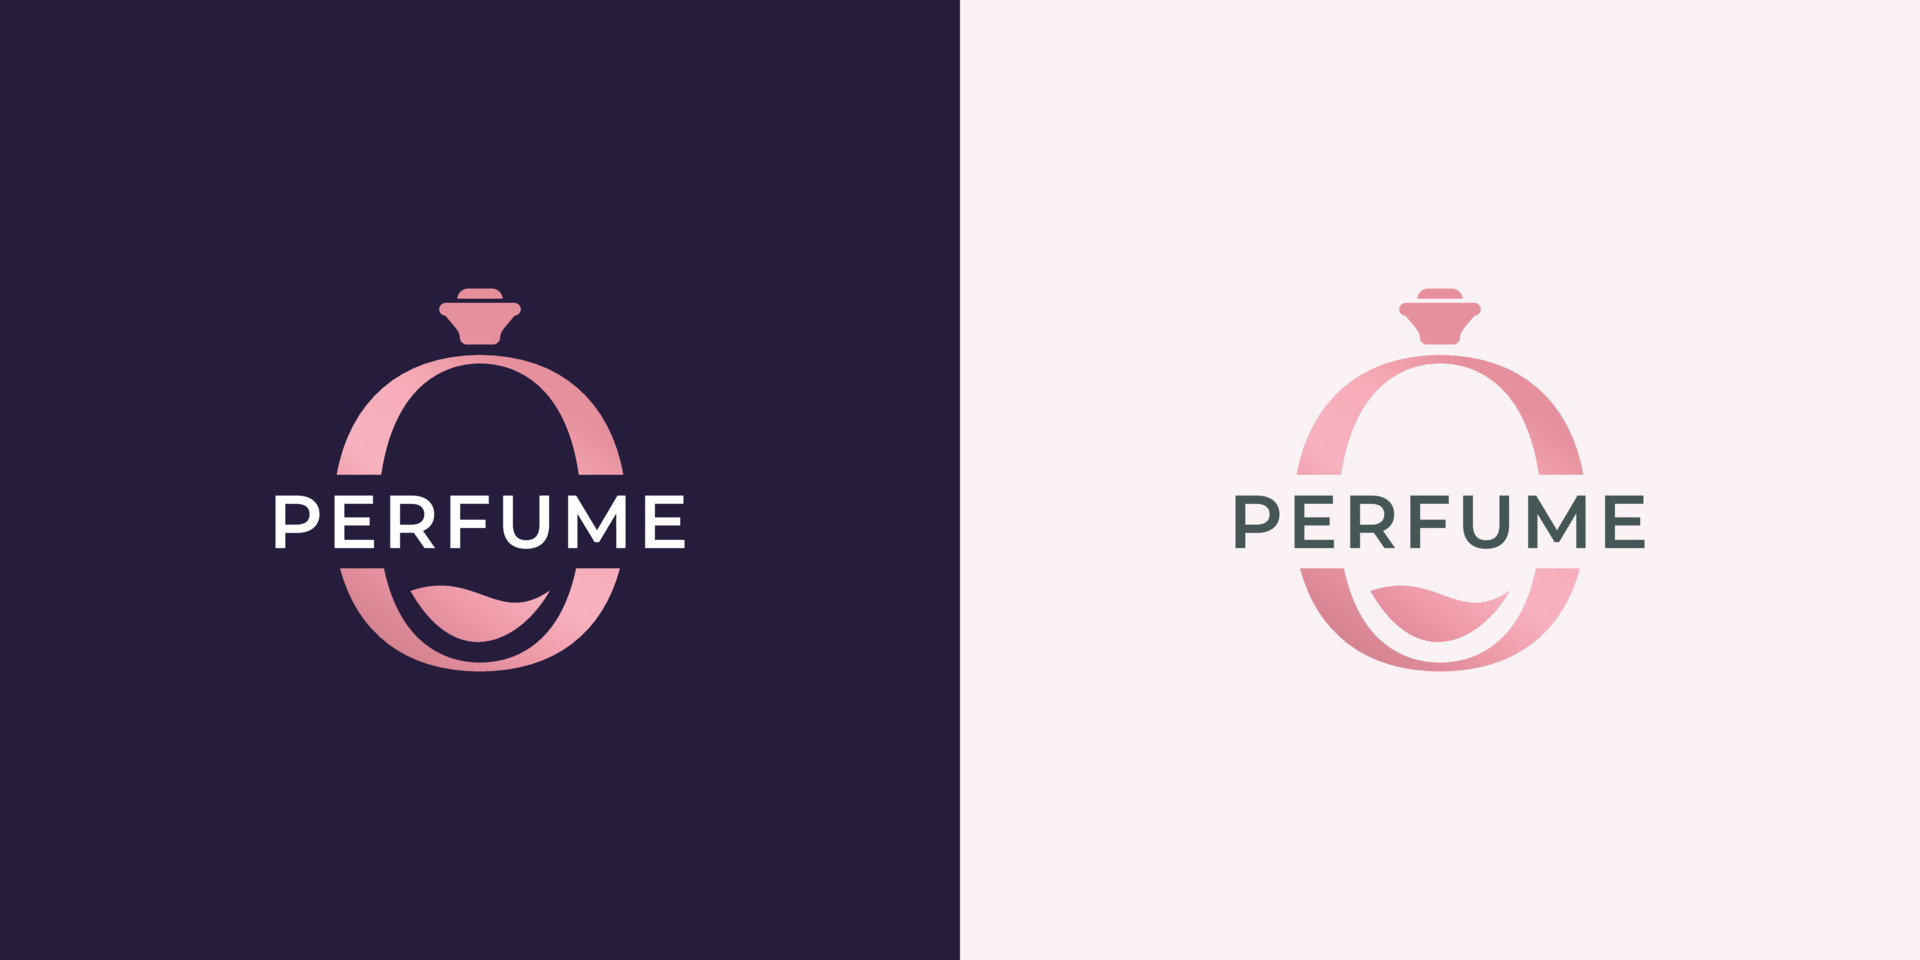 Free Vector  Luxury perfume logo with golden design